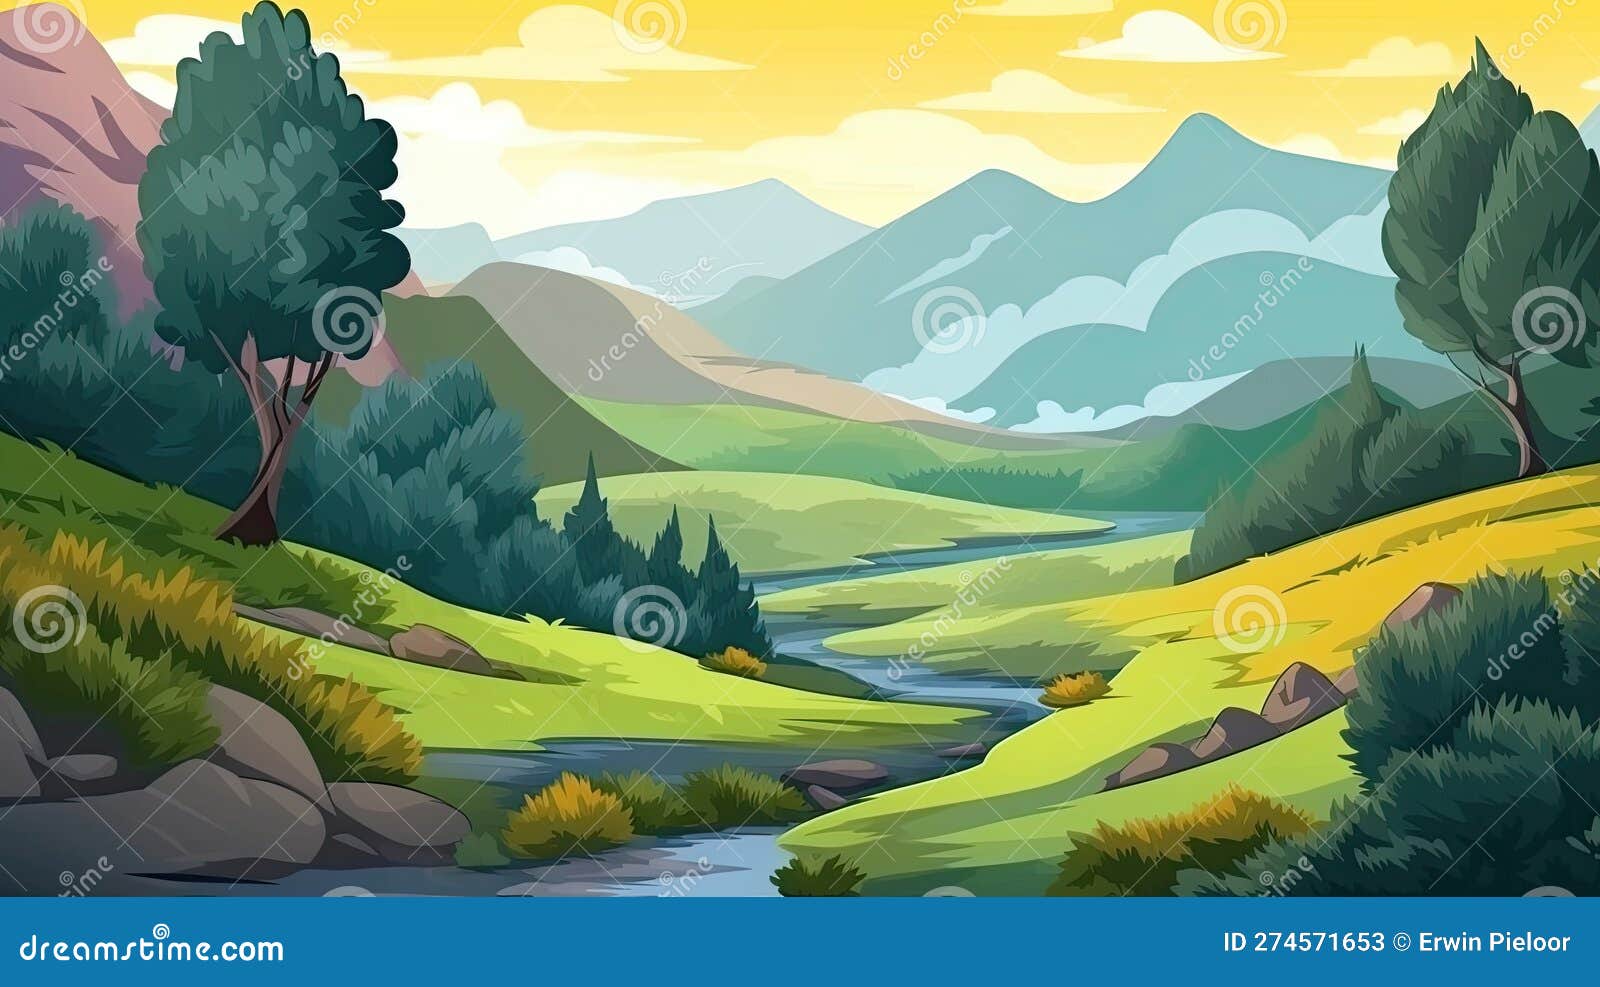 Tranquil Vistas, Picturesque Nature Artwork Stock Illustration ...